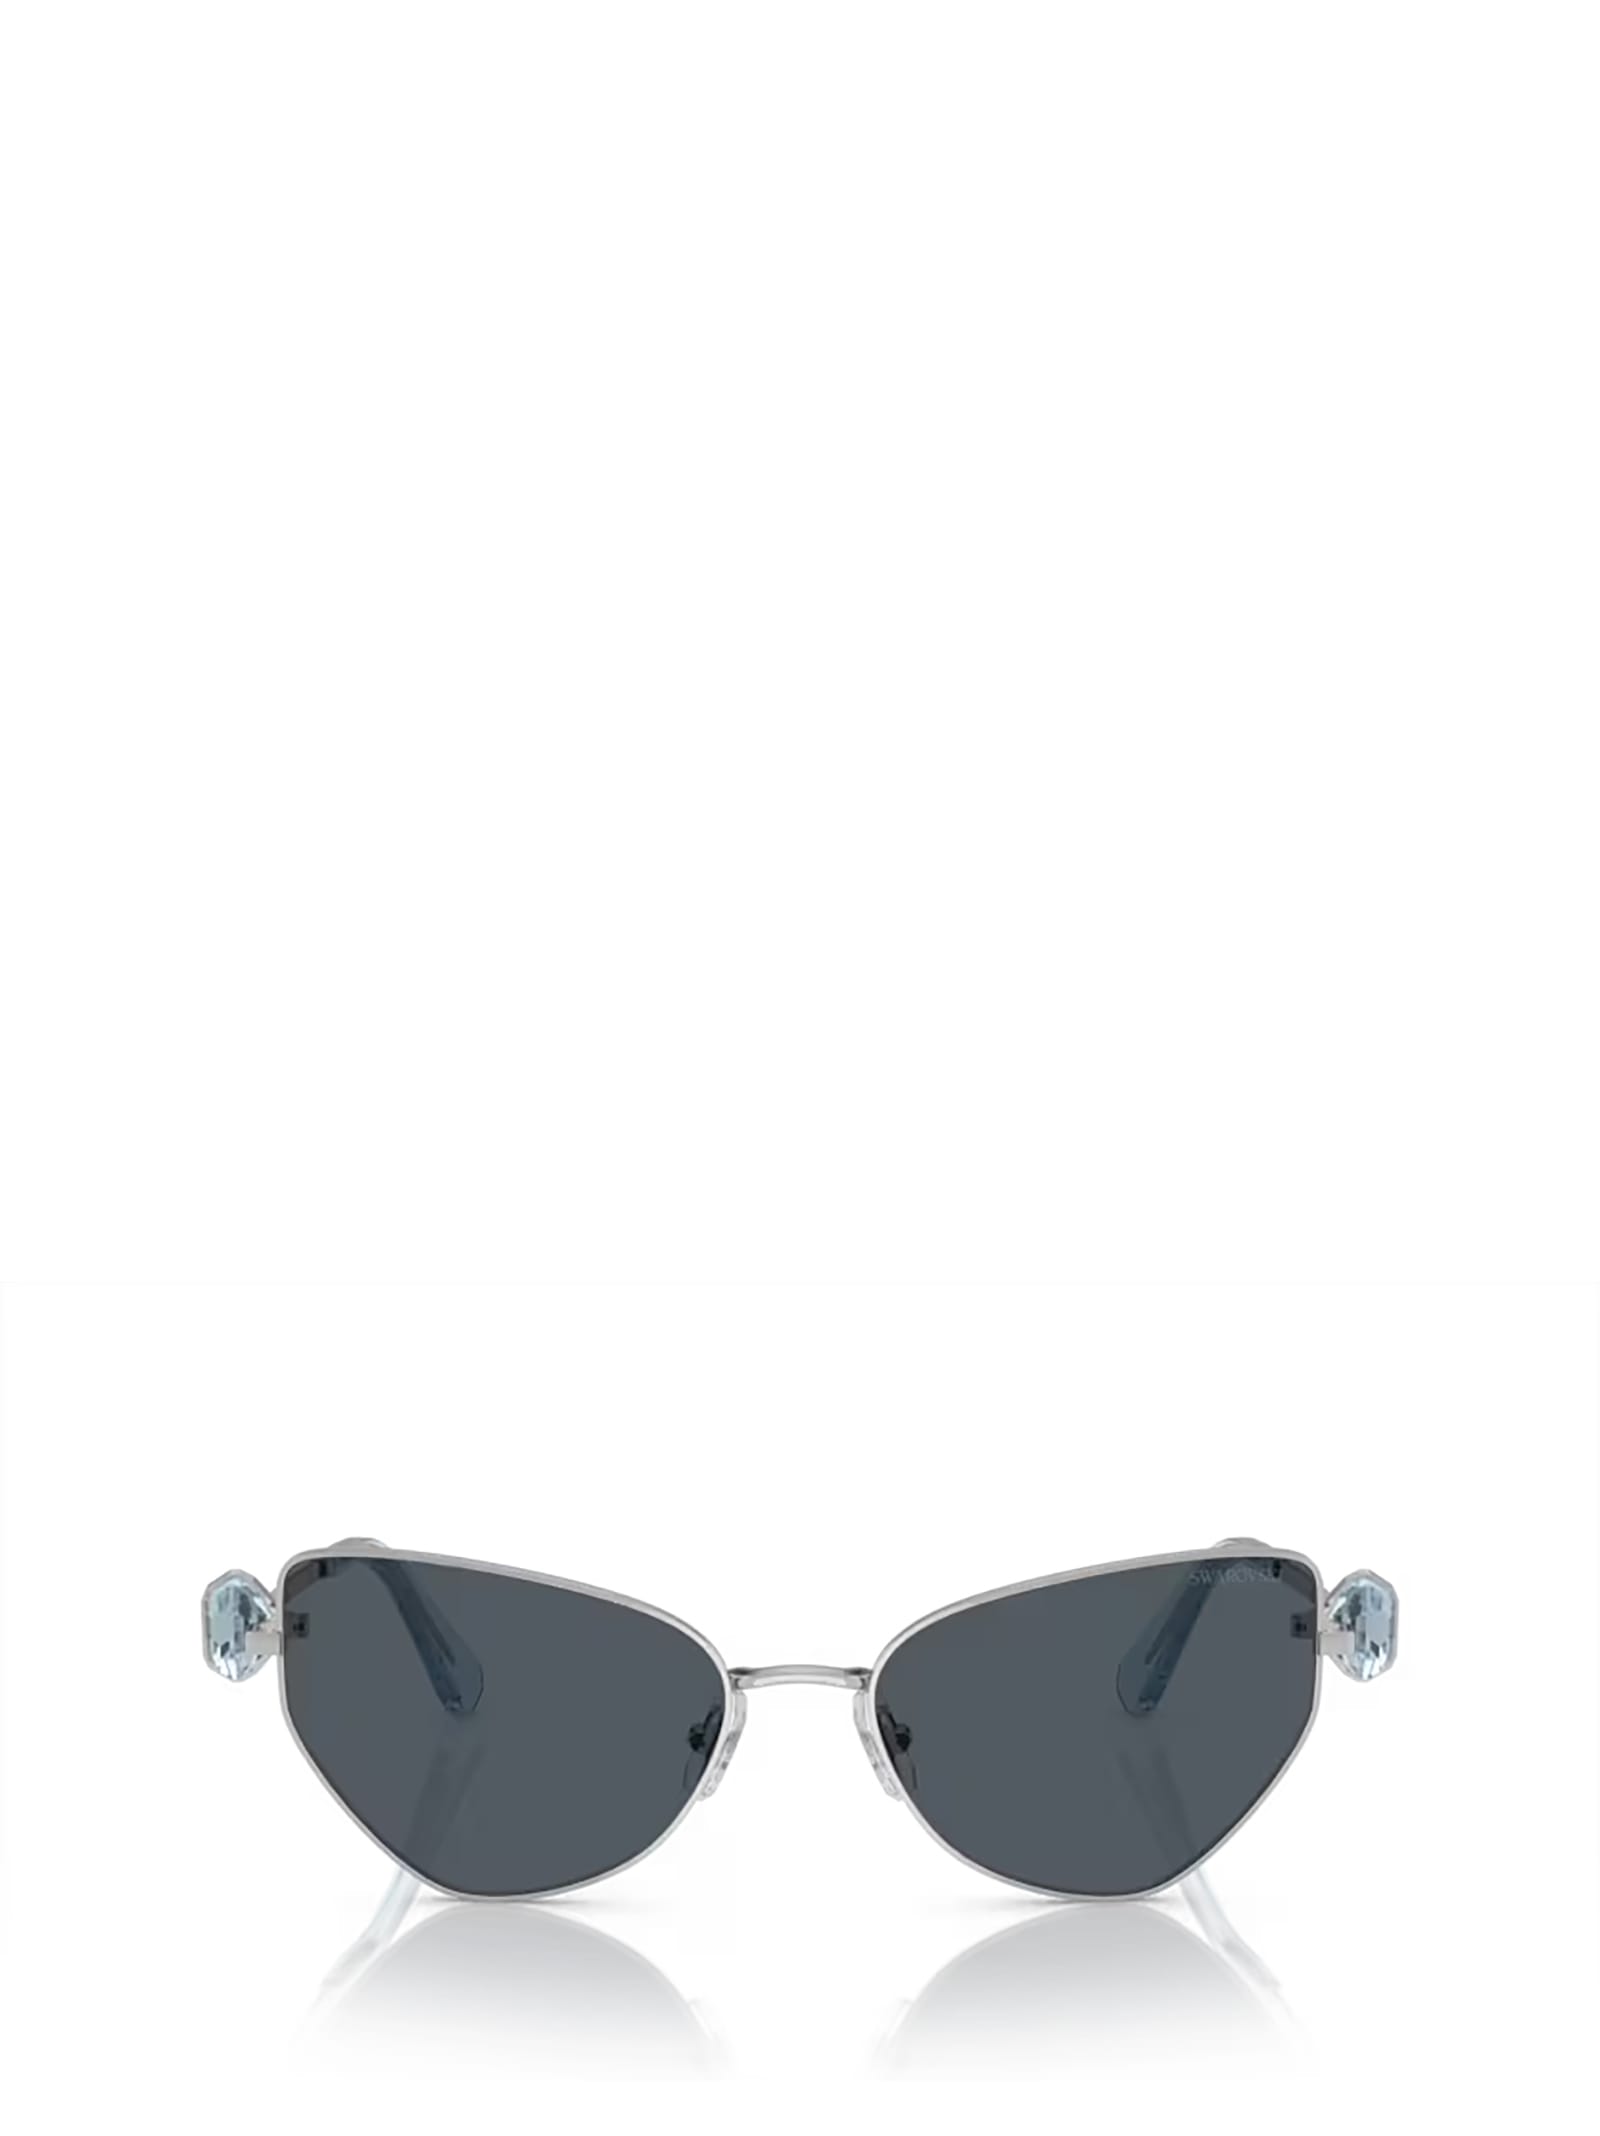 swarovski sk7003 silver sunglasses